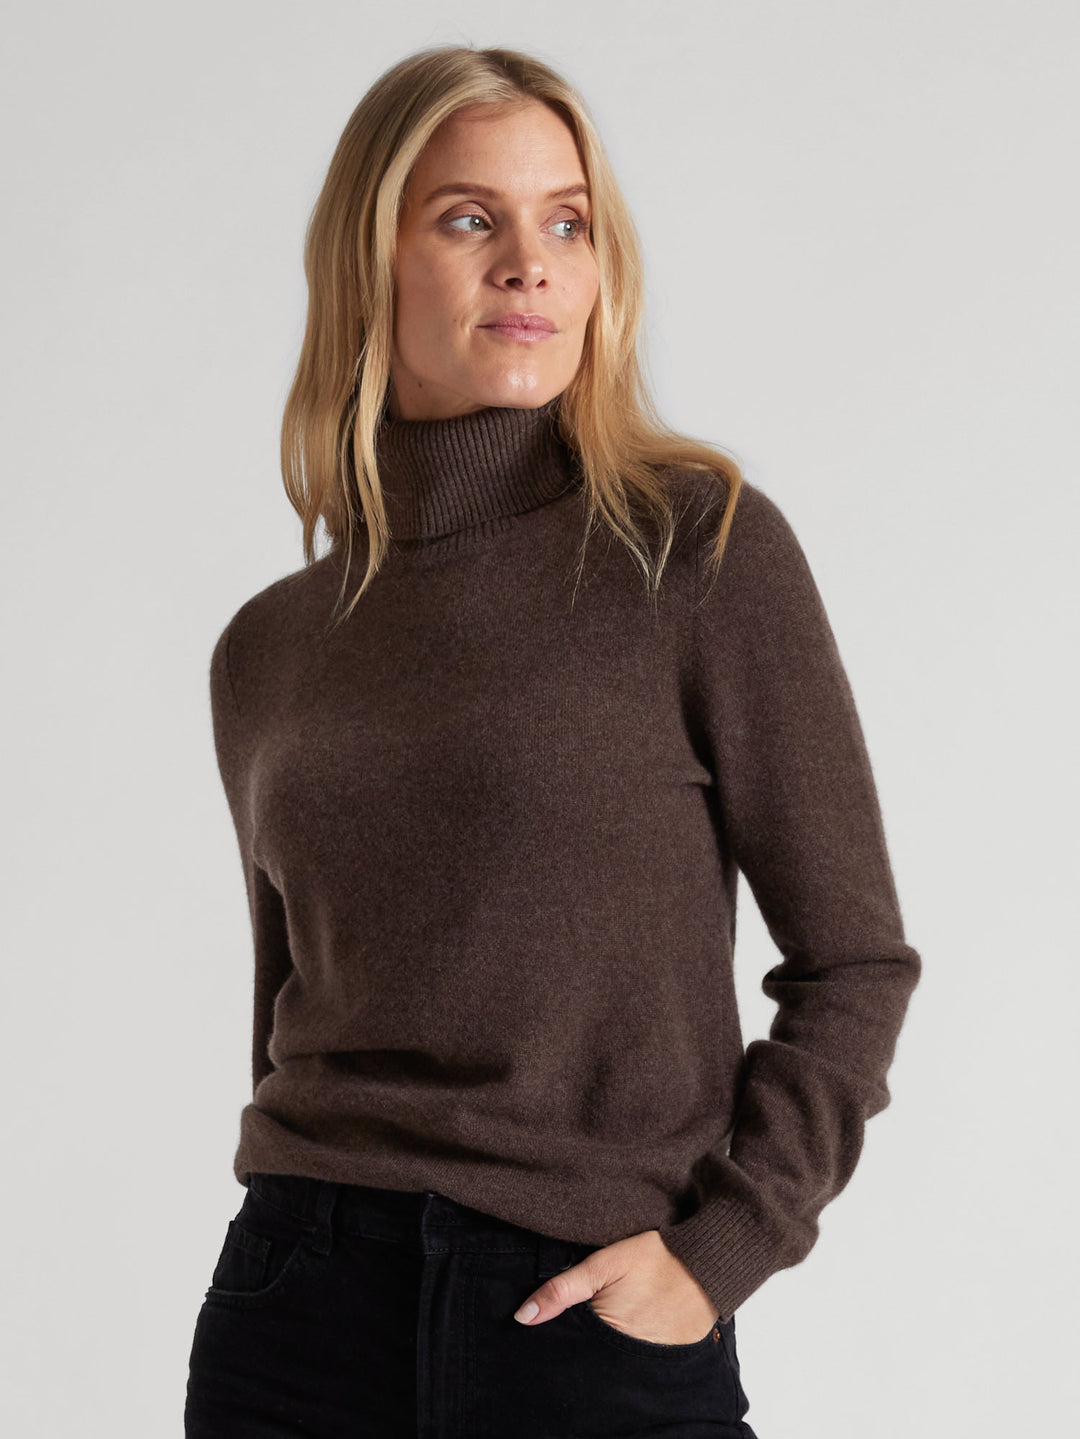 Turtleneck cashmere sweater, Dark Brown color. 100% pure cashmere. Scandinavian design by KASHMINA of Norway.